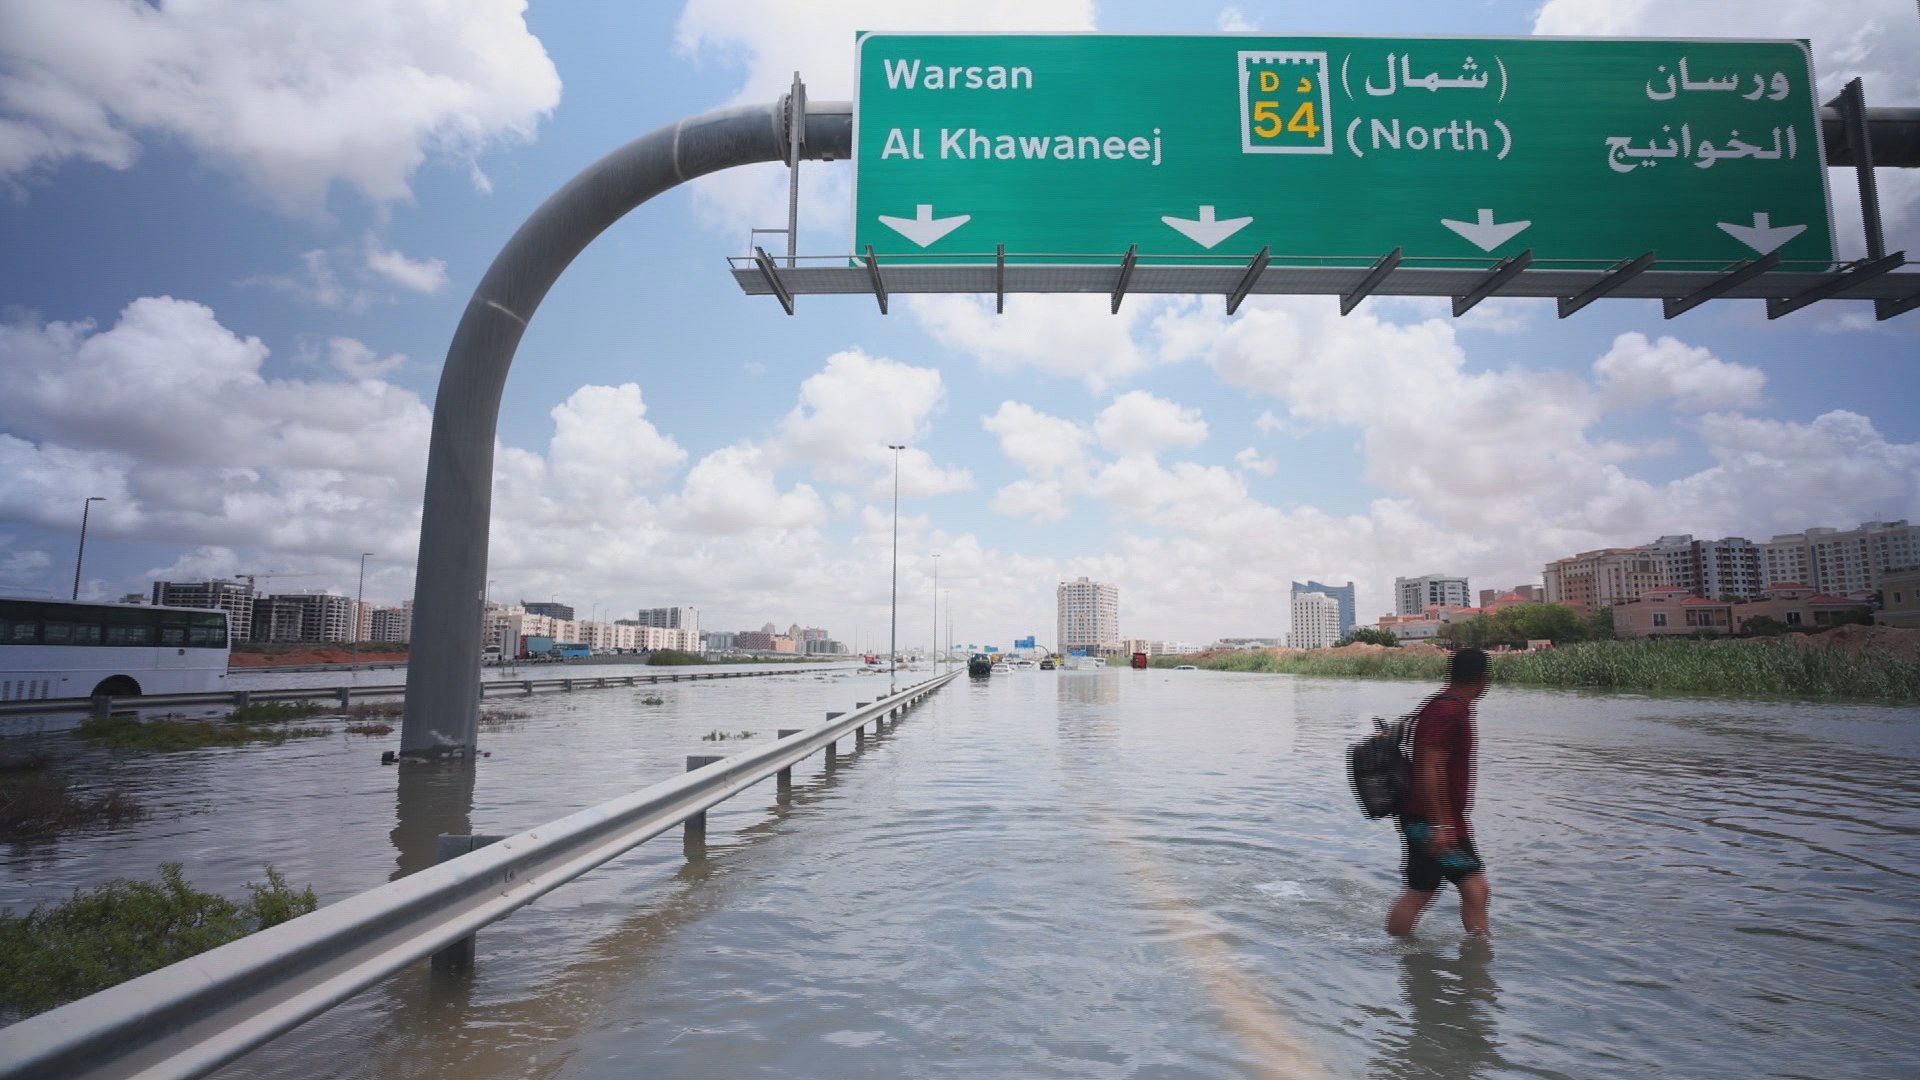 The rain prompted widespread flooding in Dubai.